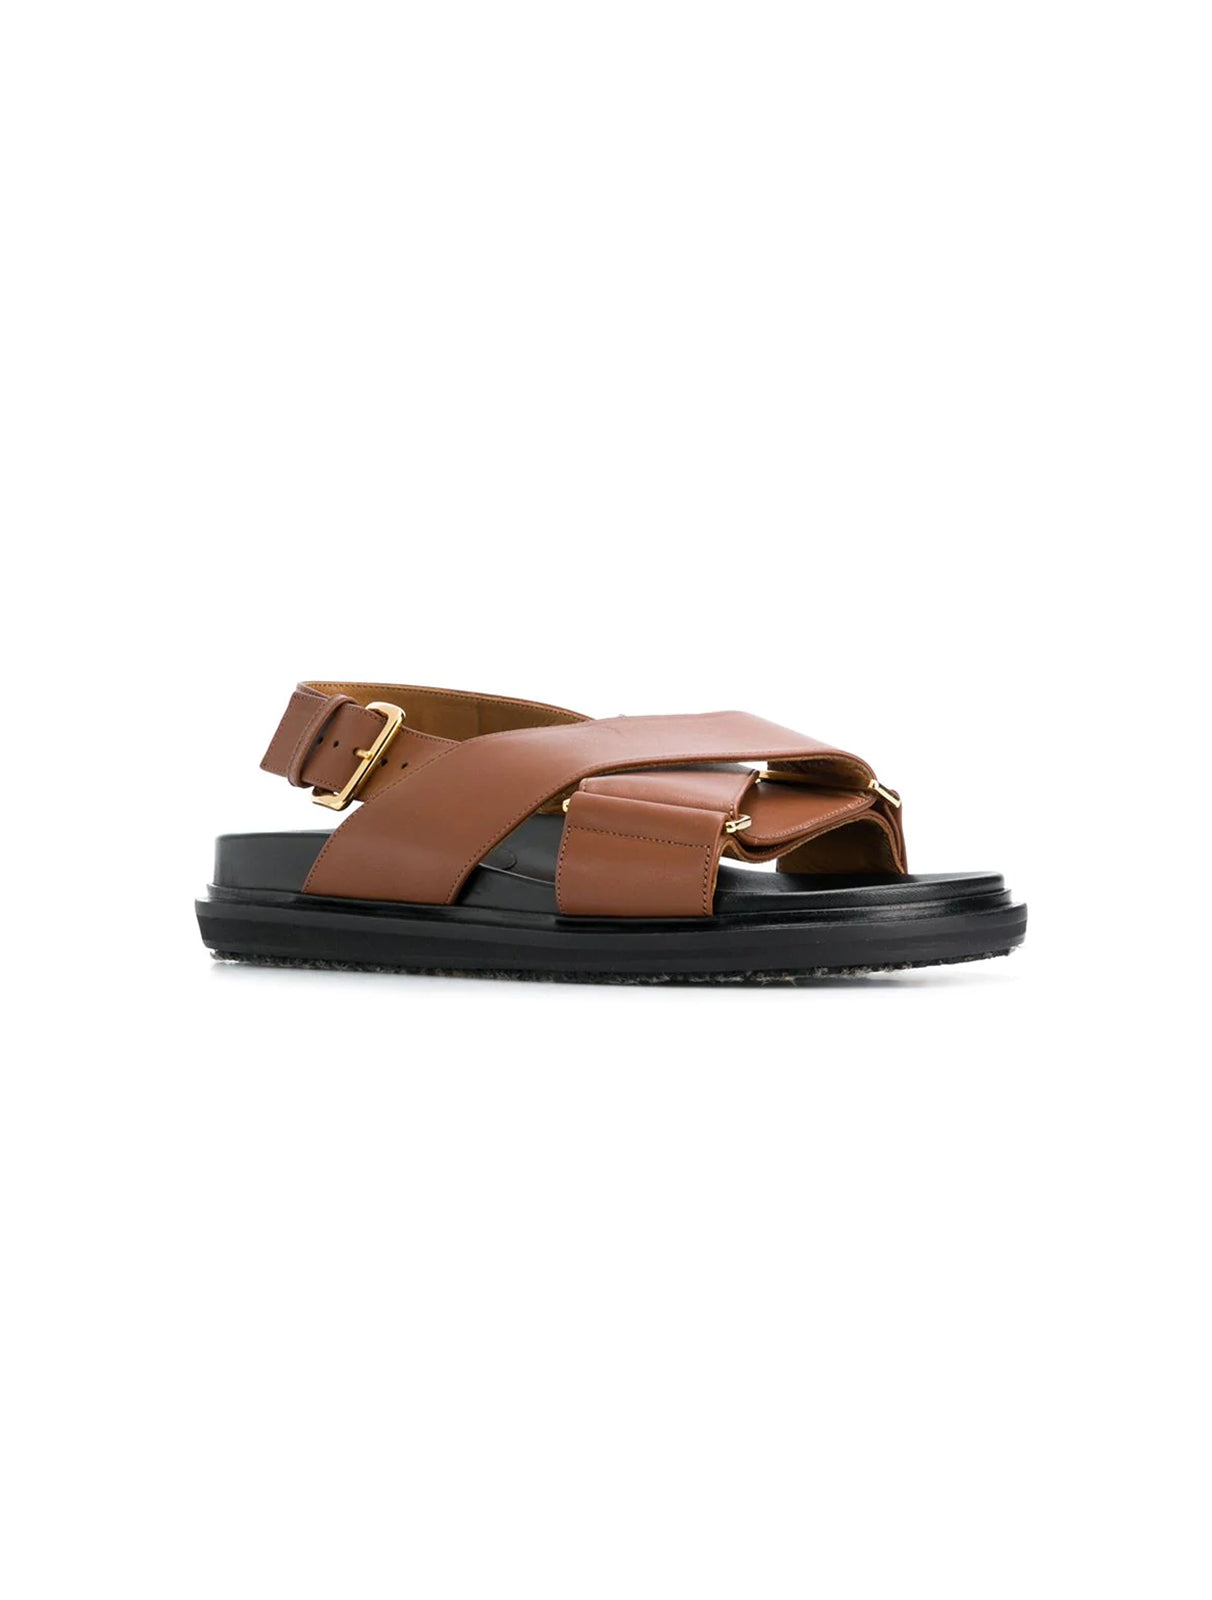 Fussbett leather sandal Marni Black size 41 EU in Leather - 36035272